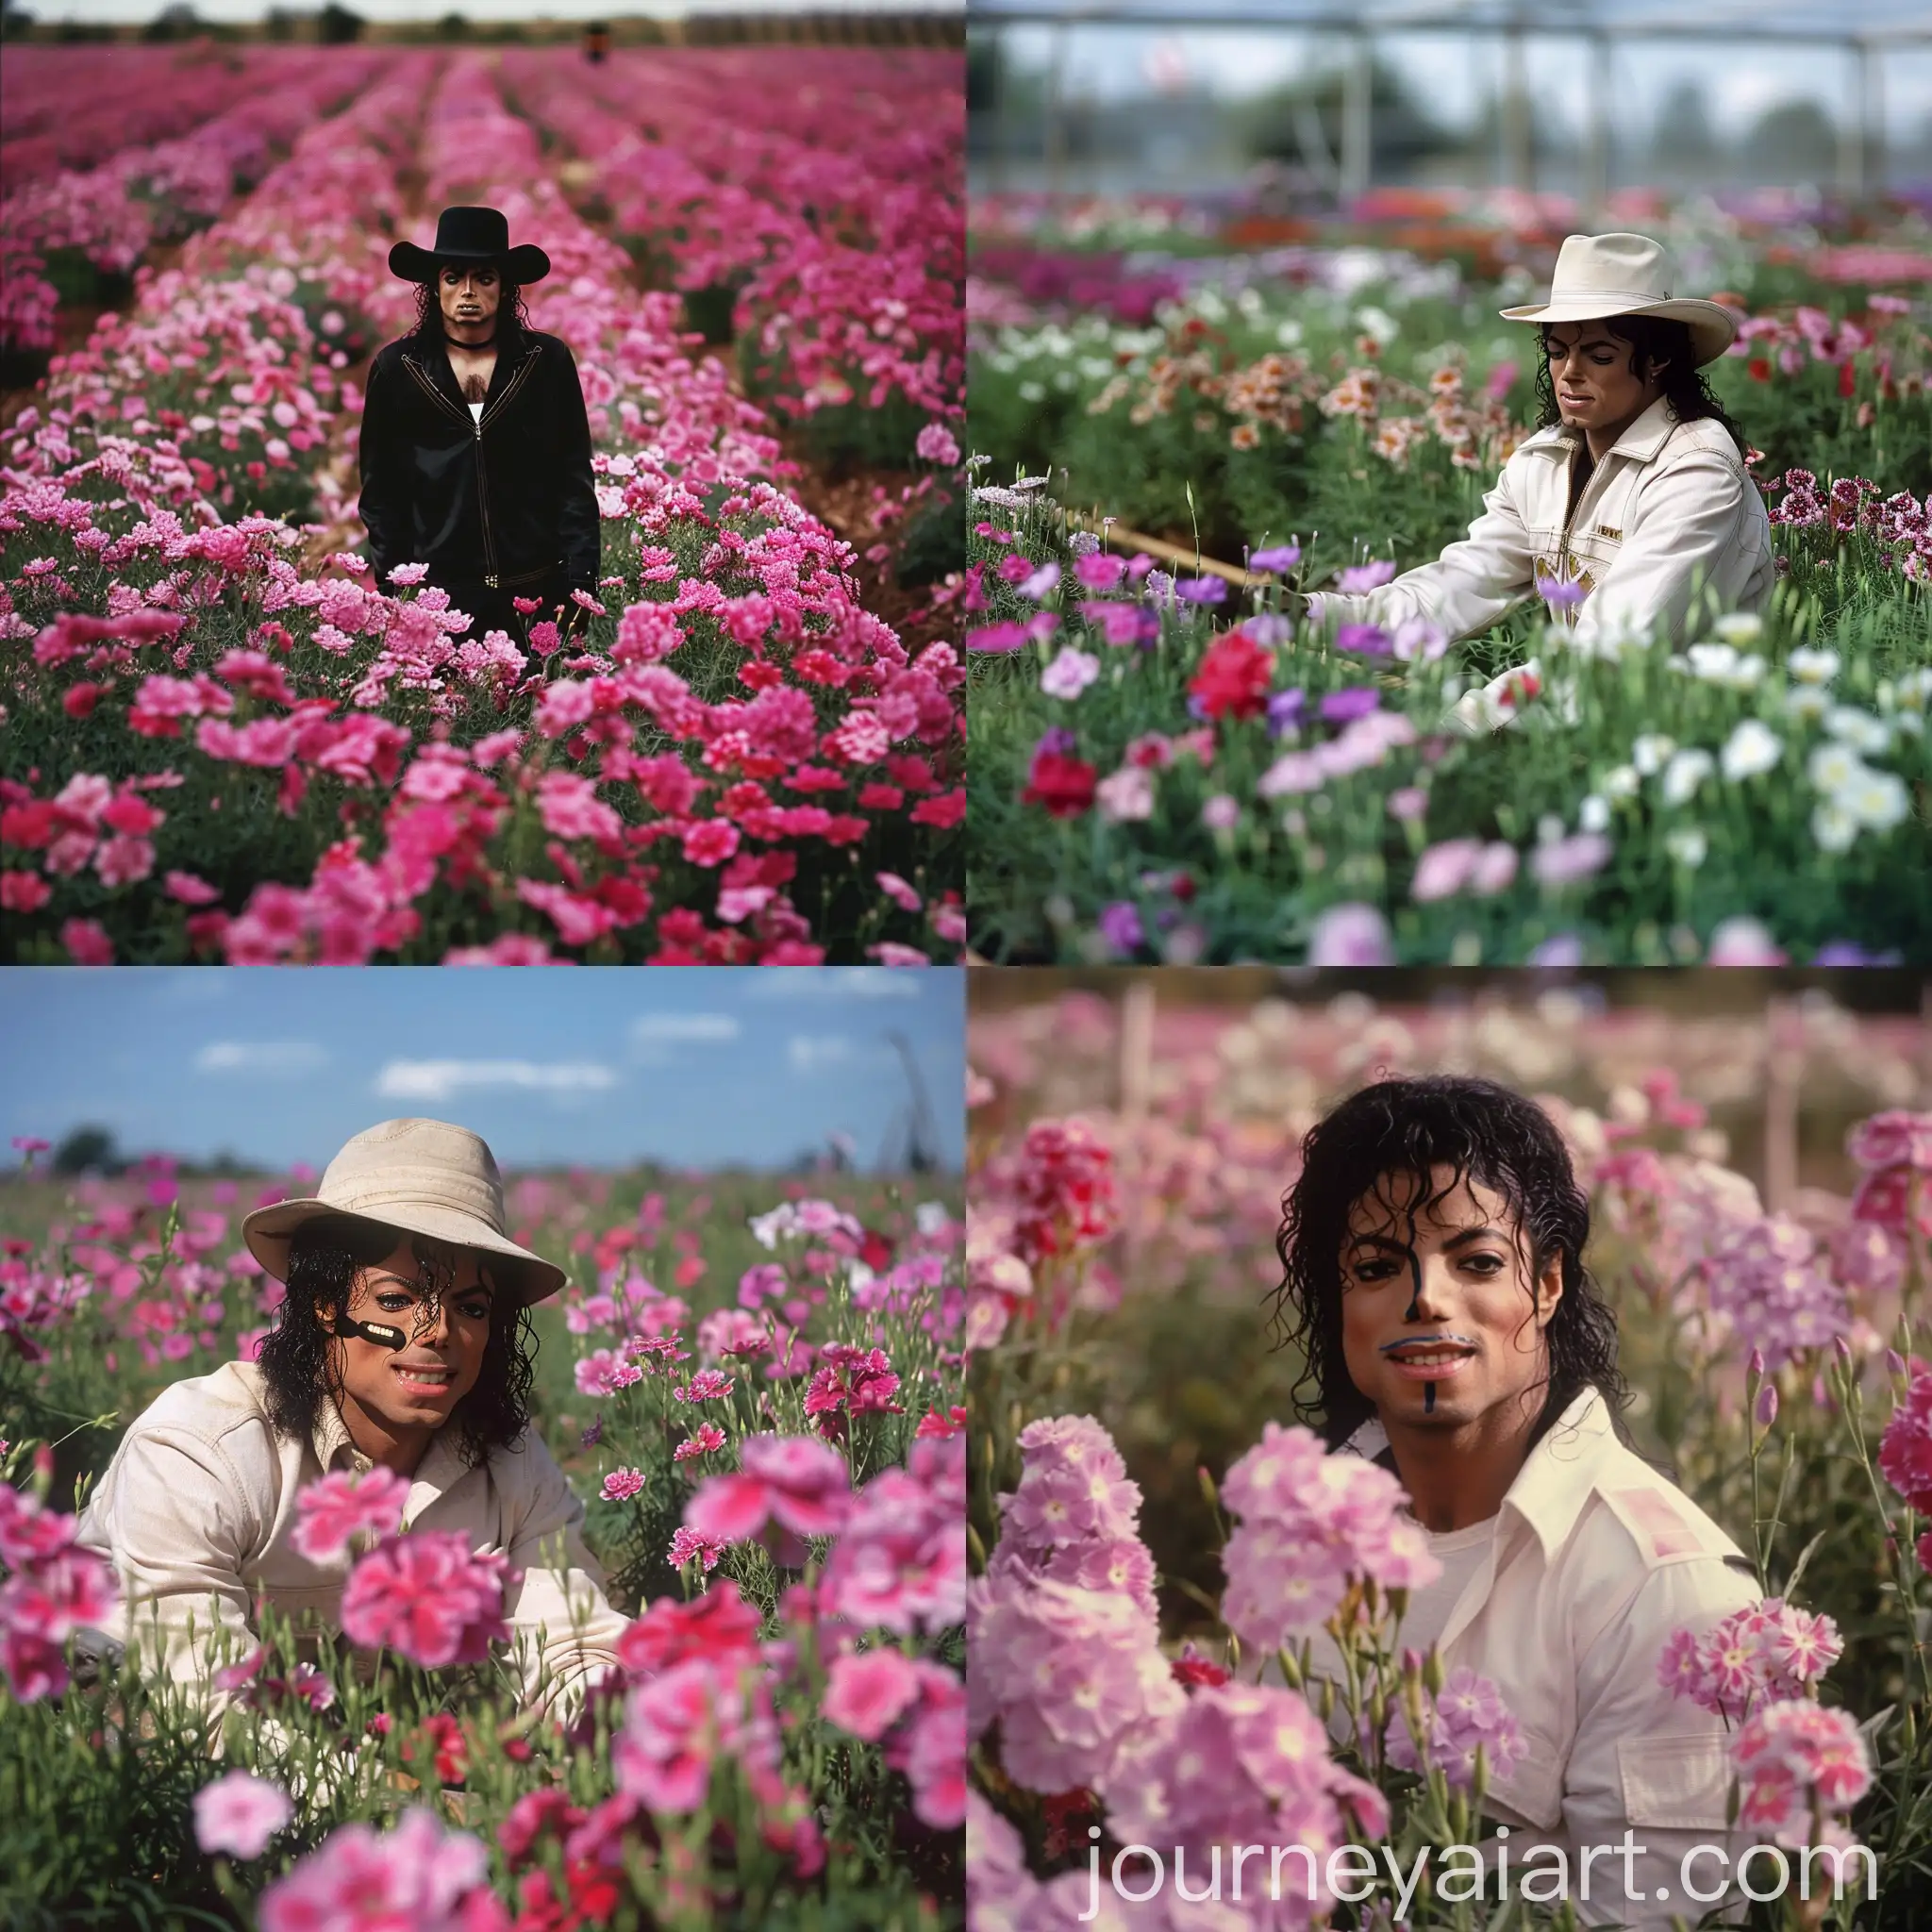 Michael-Jackson-Dancing-in-the-Dianthus-Farm